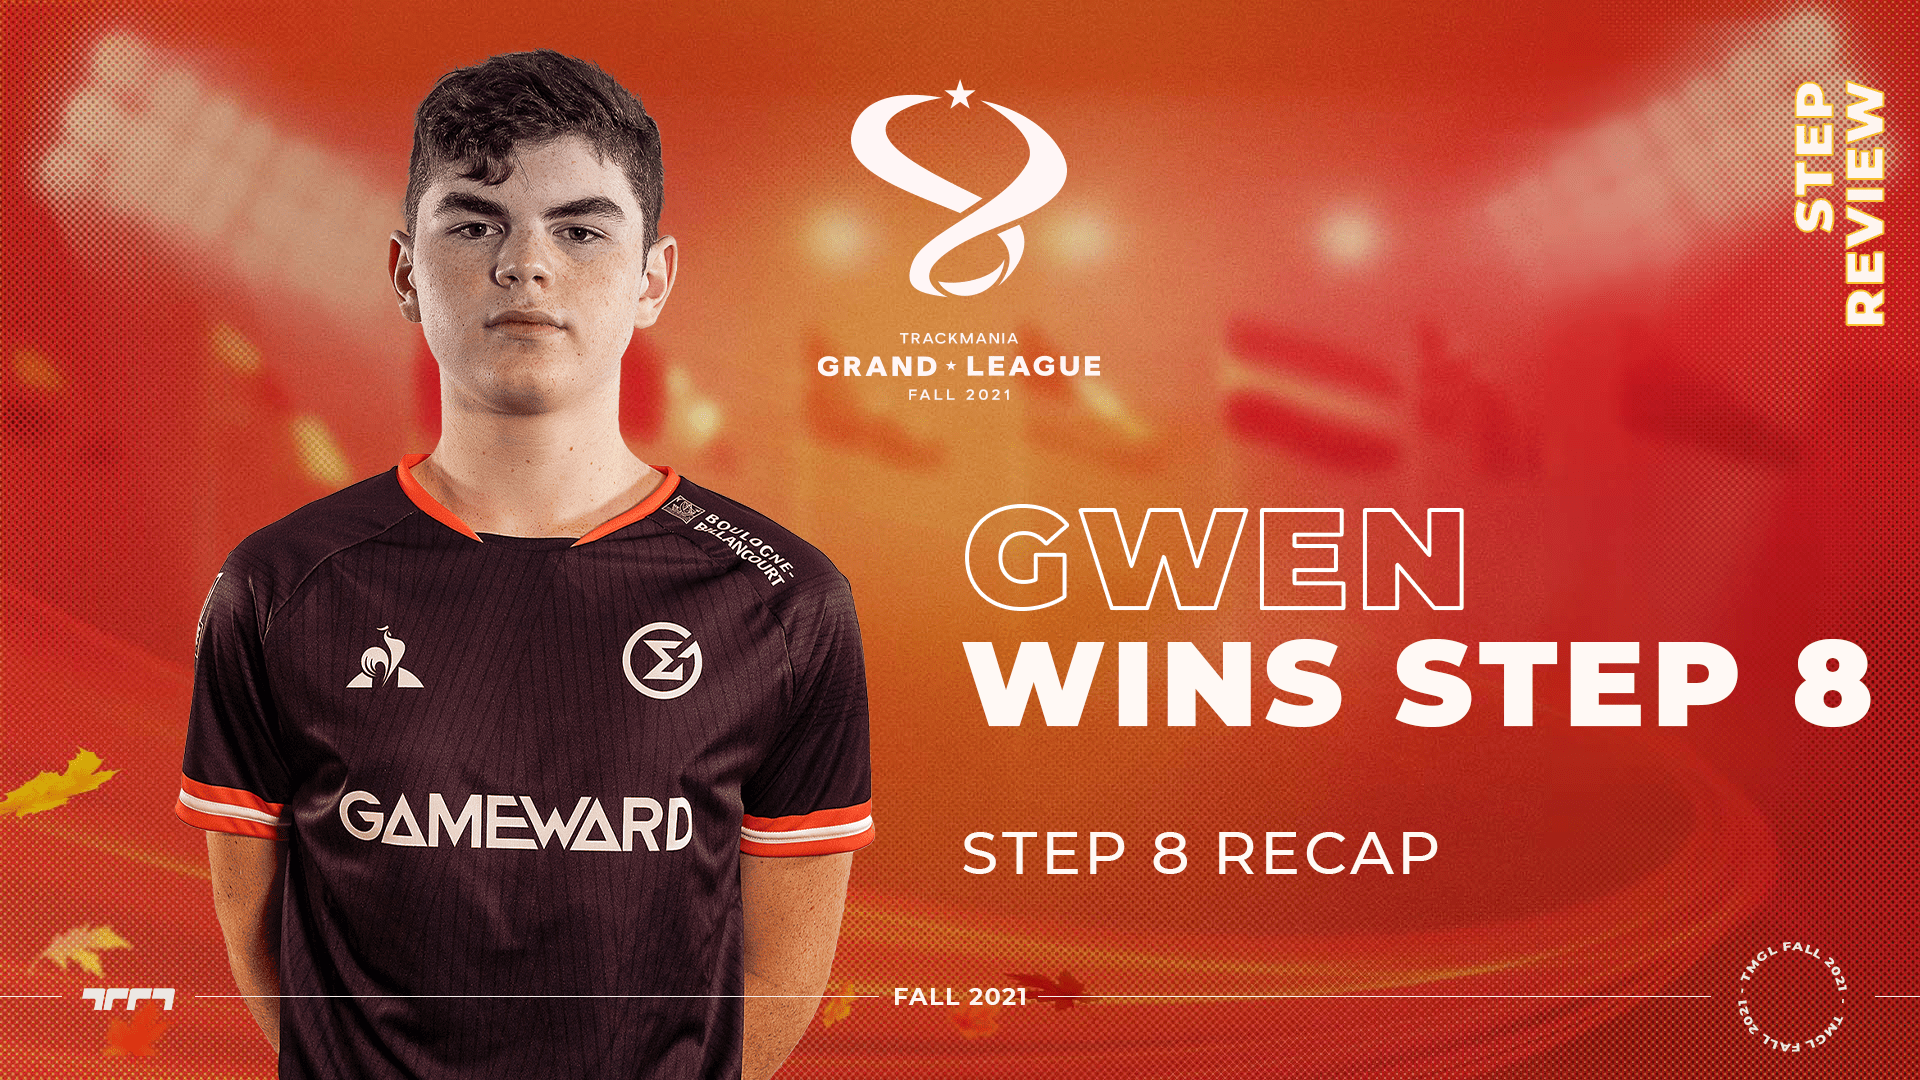 Gwen wins step 8 and the regular season